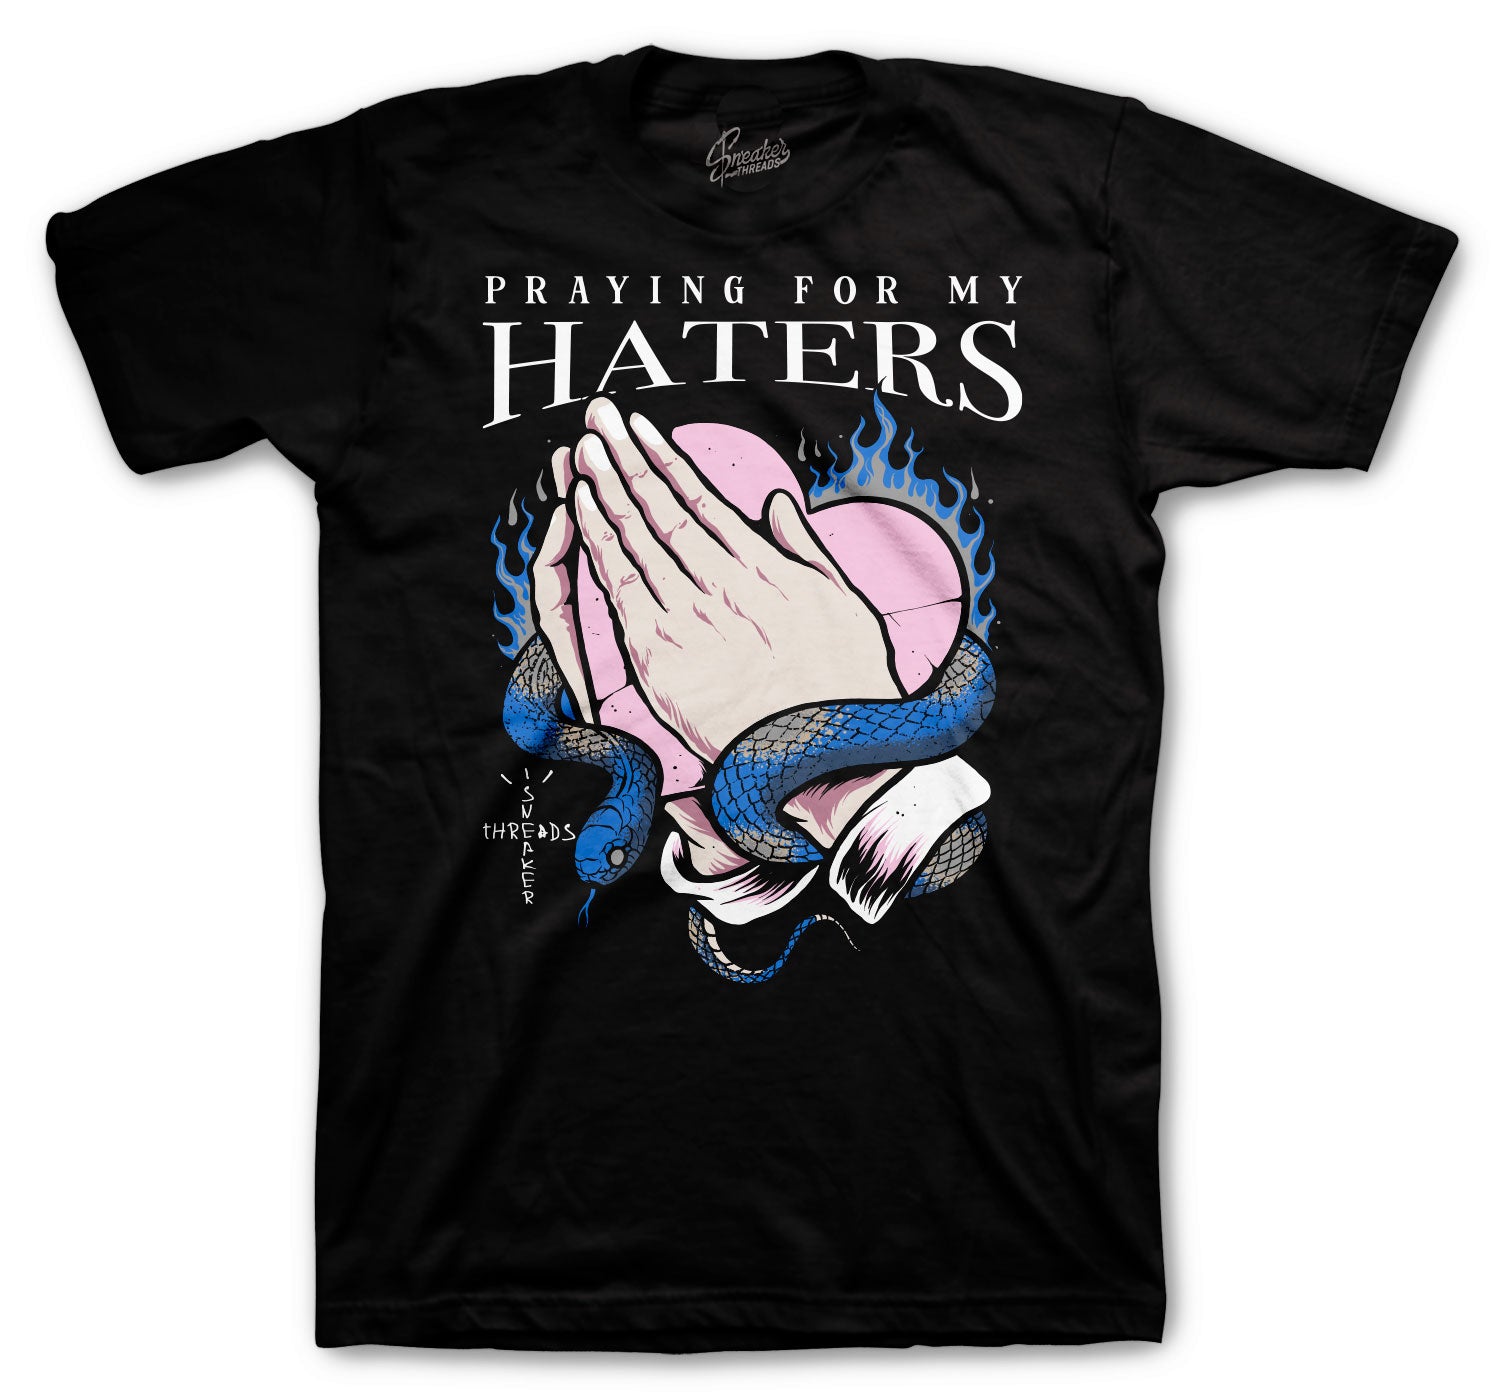 Retro 1 Travis Scott Fragment Shirt - Pray For Haters - Black